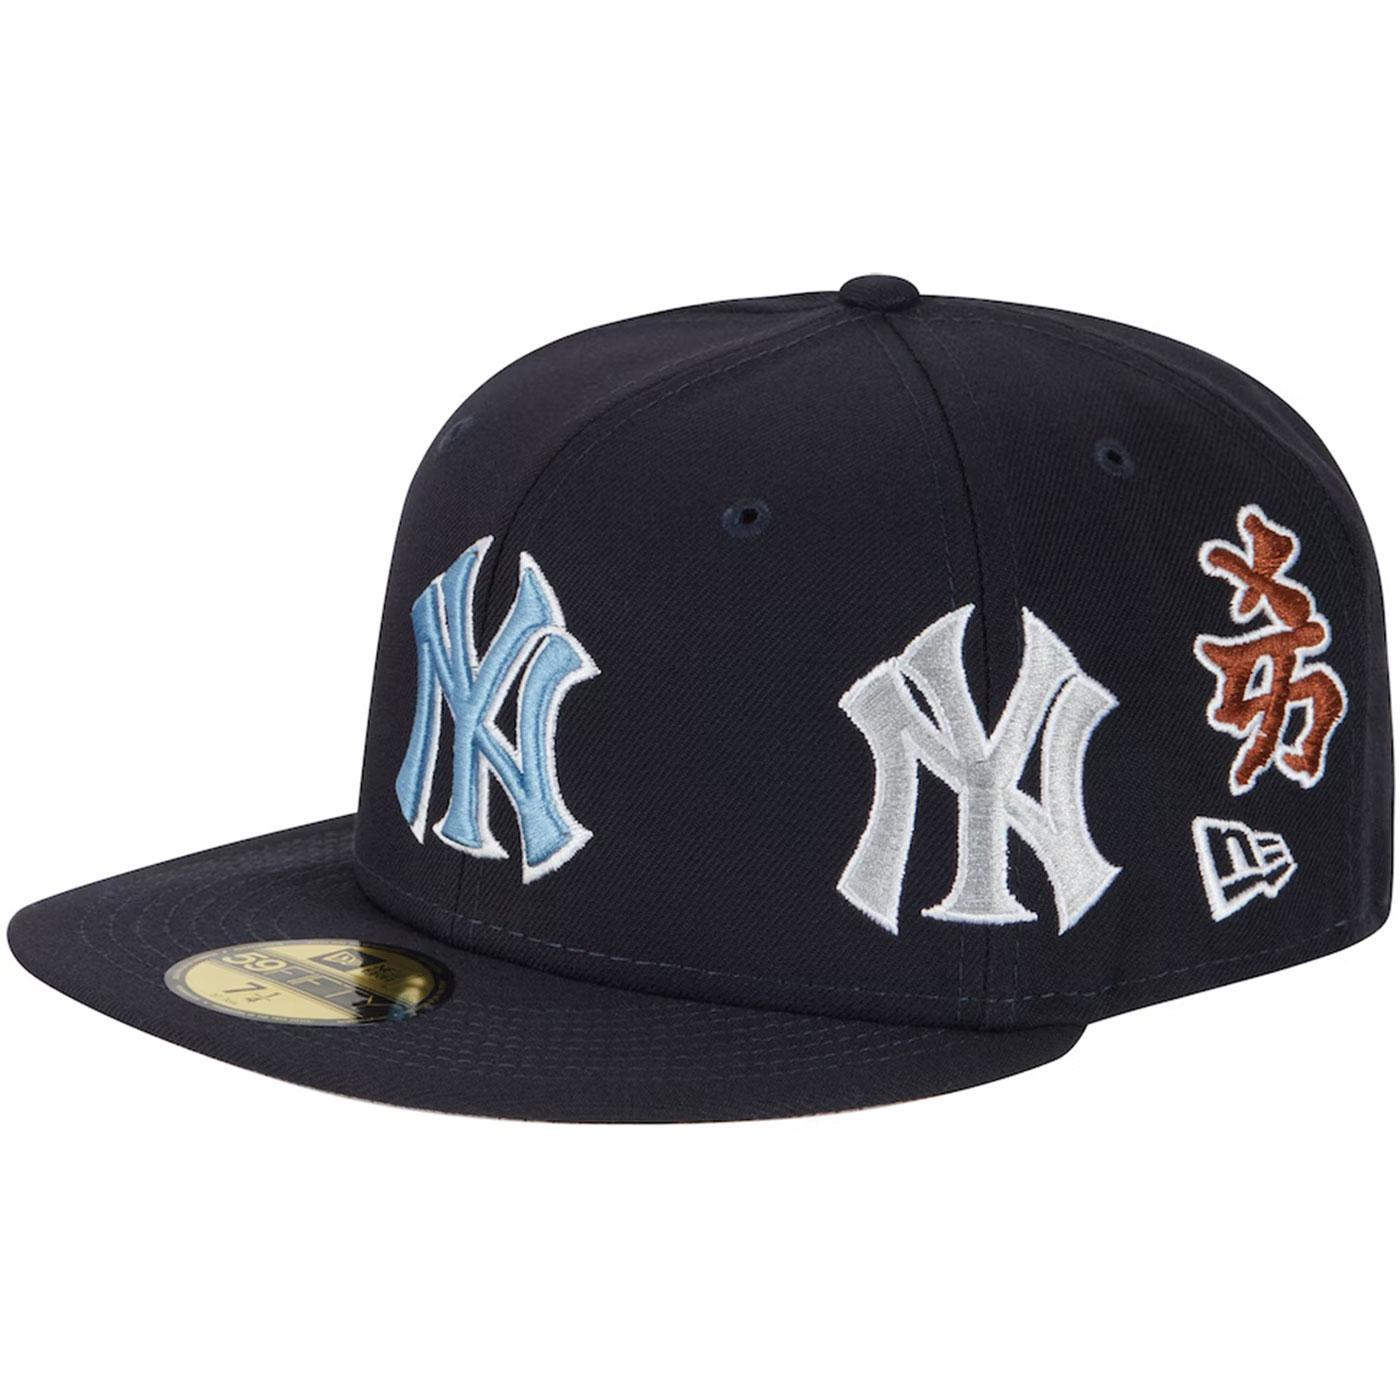 Supreme x NEW YORK YANKEES NEW ERA Cap kanji CAP New Era Caps Red 7 5/8